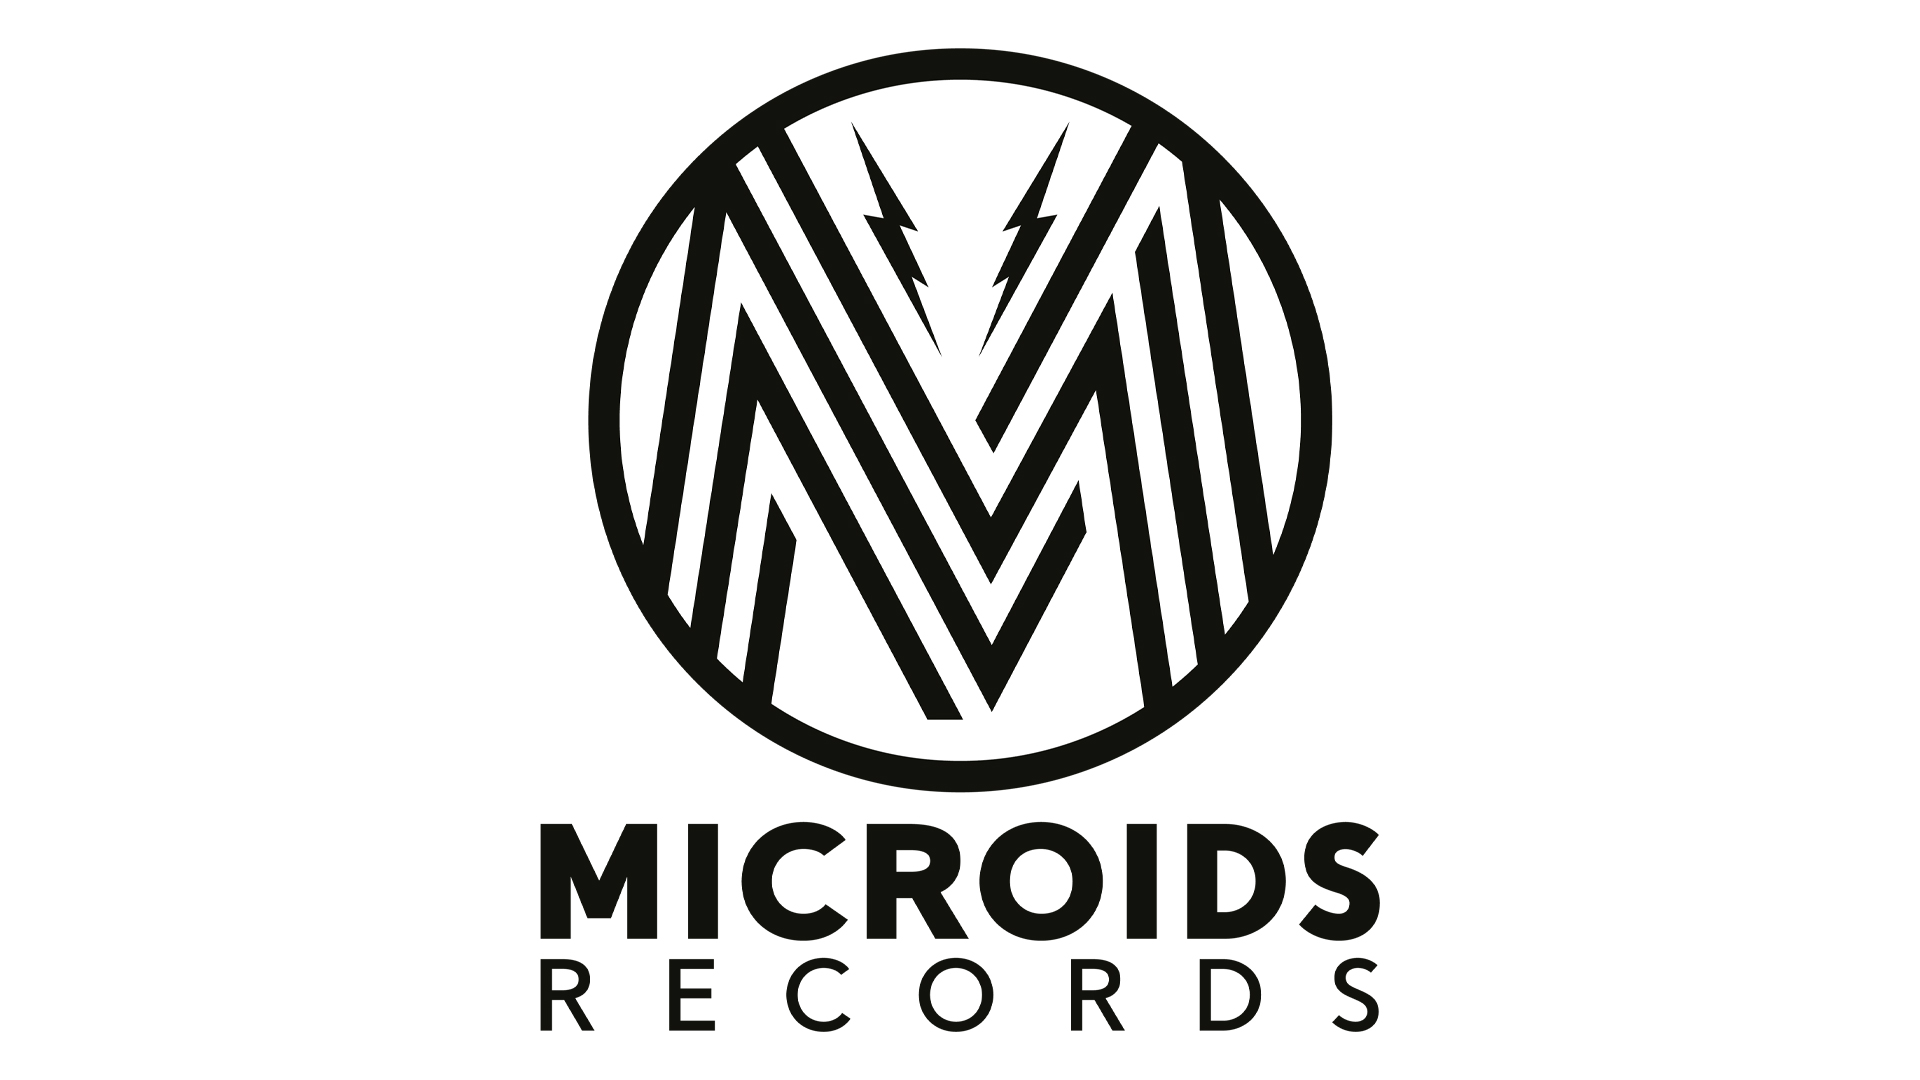 NANA (Best) – Microids Records